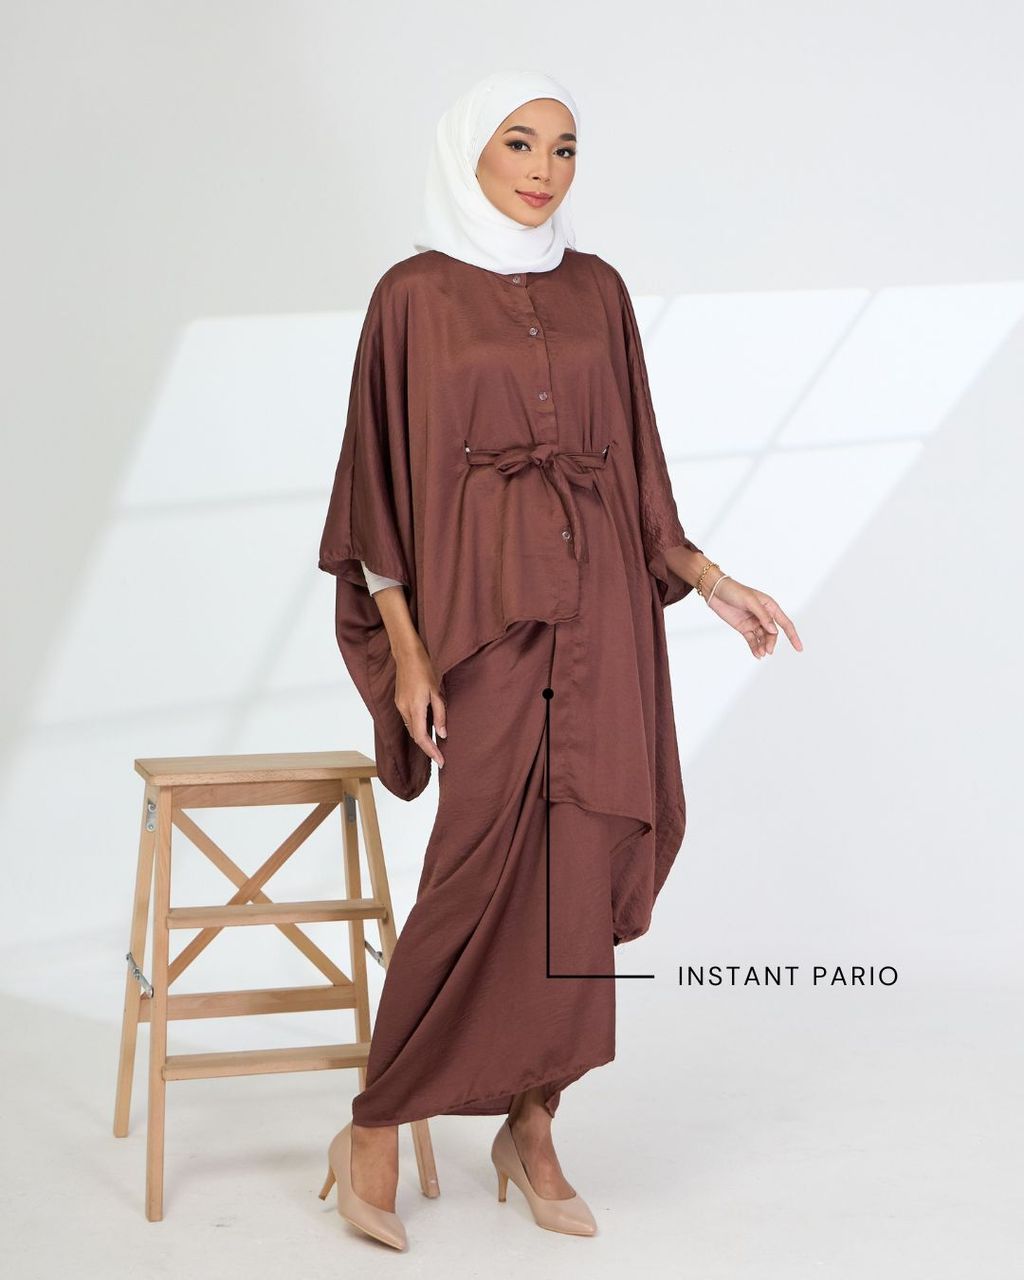 haura-wear-vivy-skirt-set-sulam-embroidery-pario-klasik-tradisional-mini kebaya-fabrik eyelet-raya-muslimah-long-sleeve-baju-skirt-kain-perempuan-baju-sepasang (5)